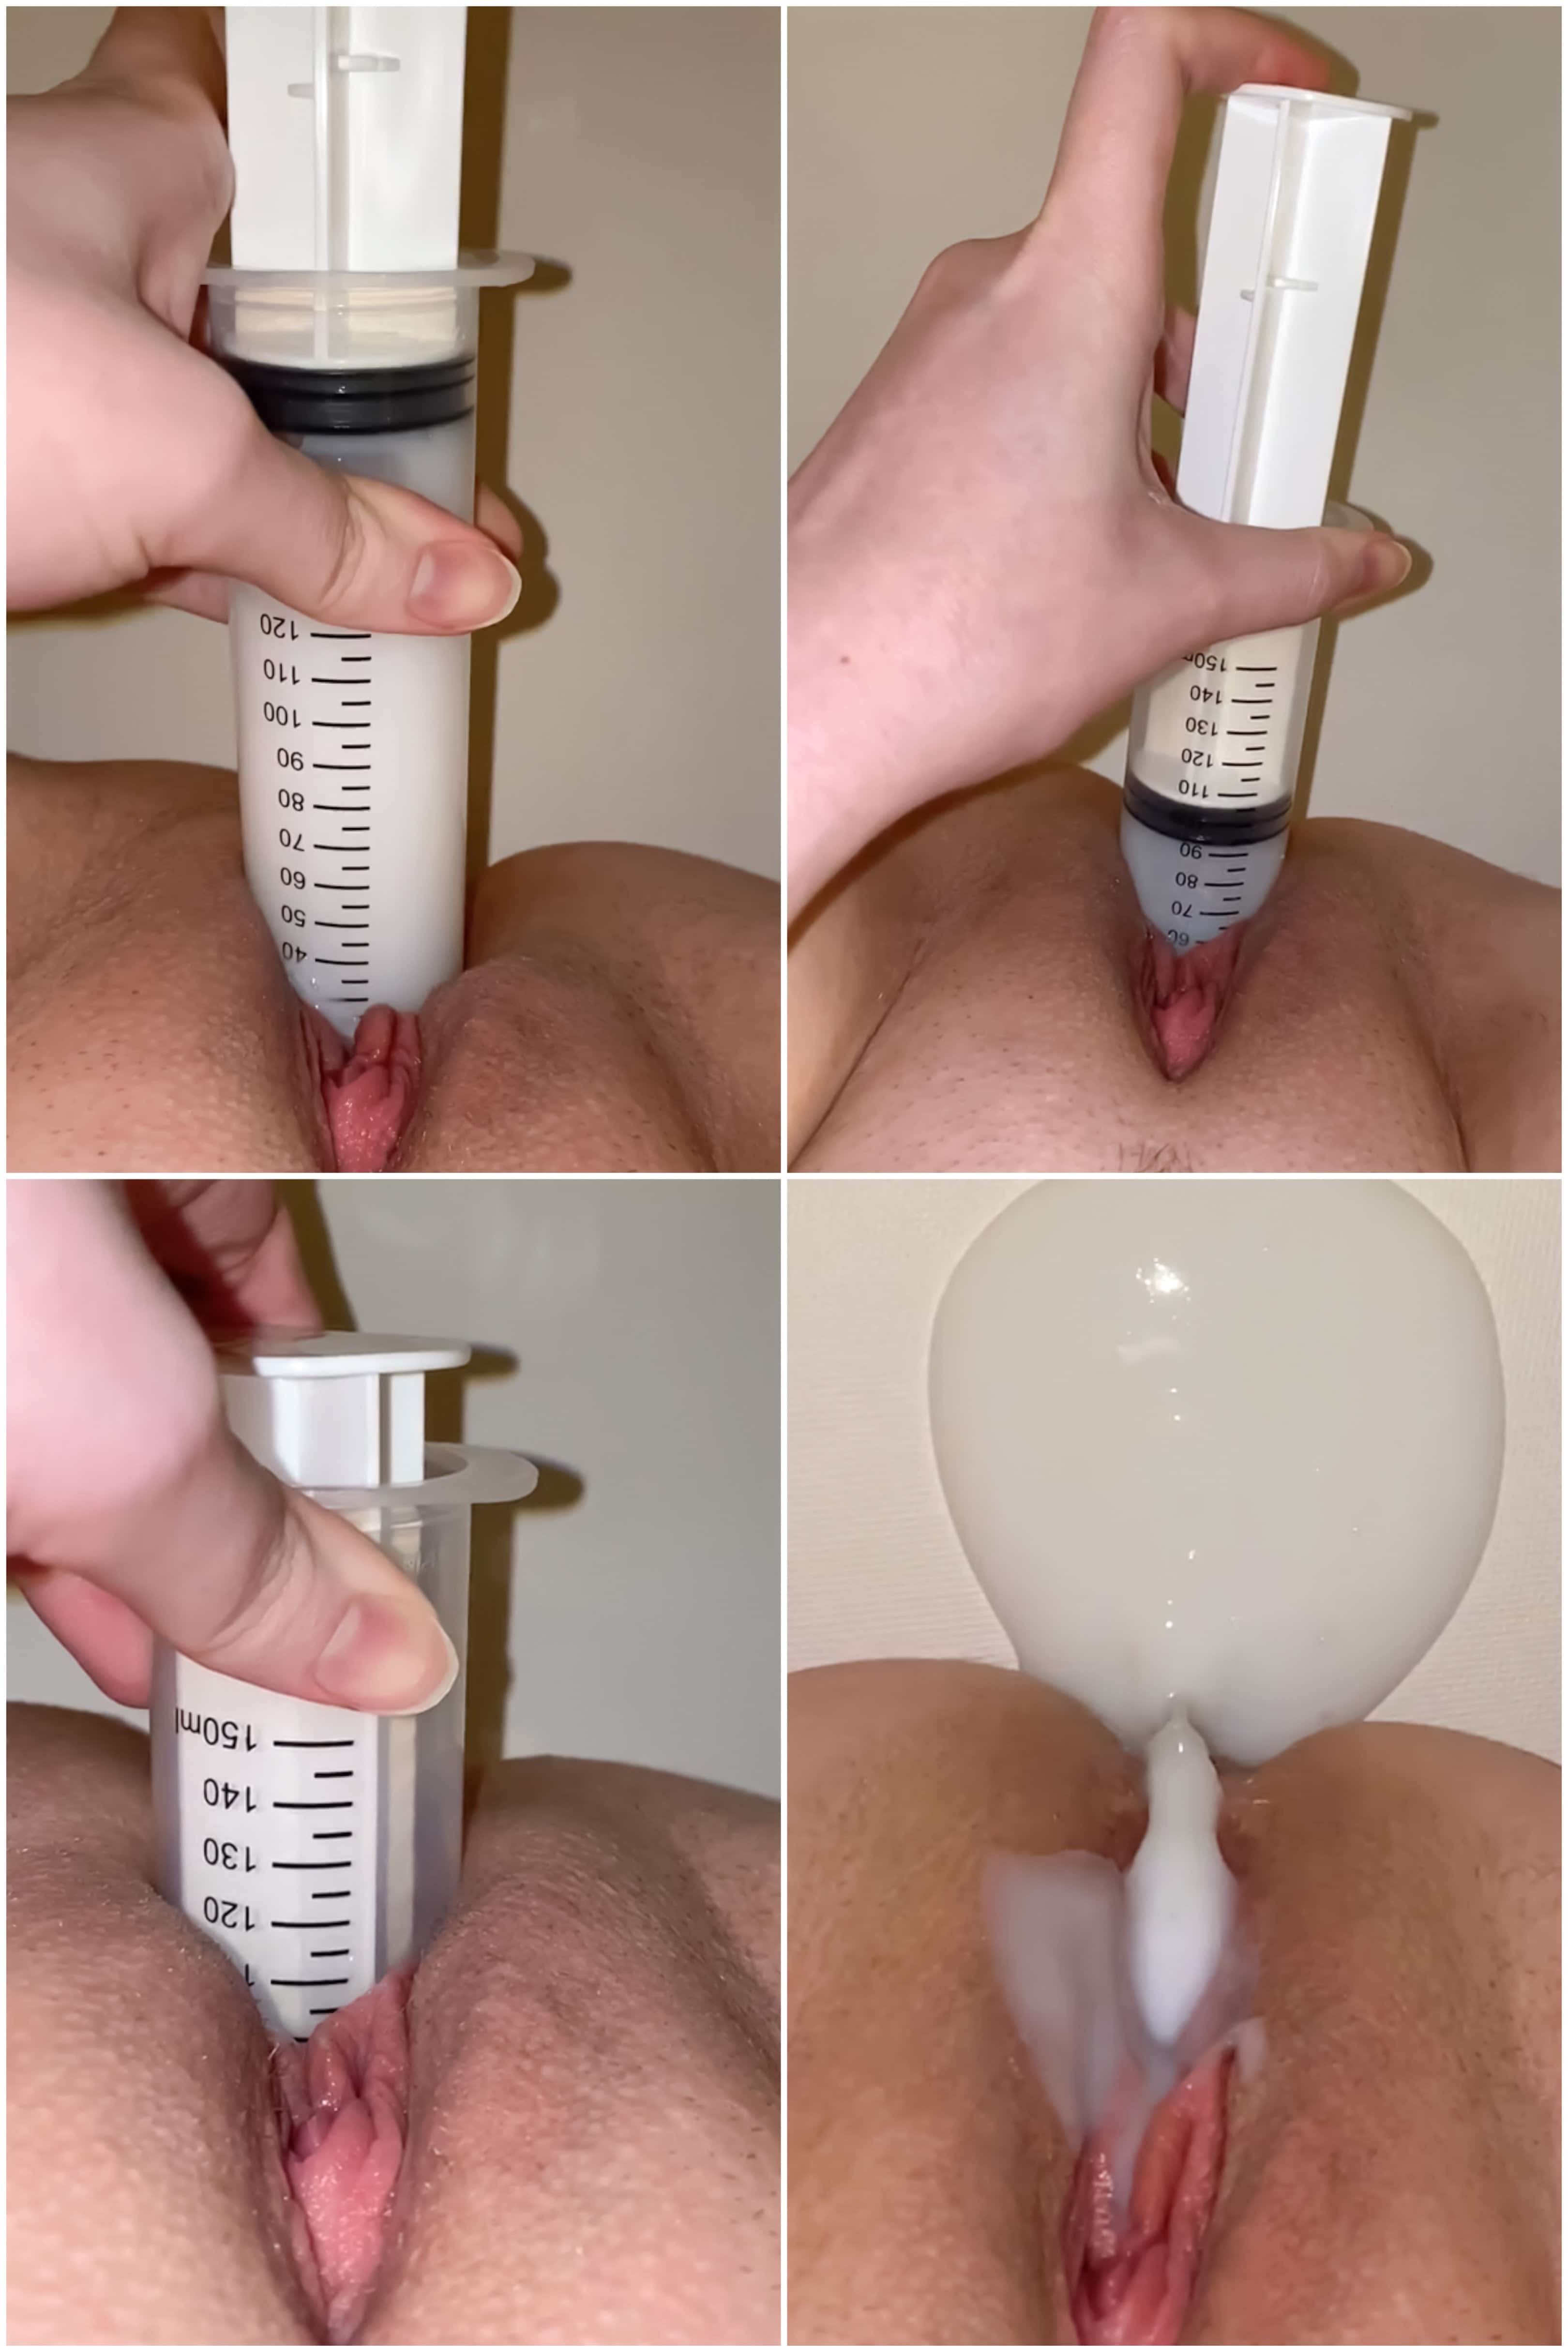 sperm injected free cuckold porn movies Porn Photos Hd